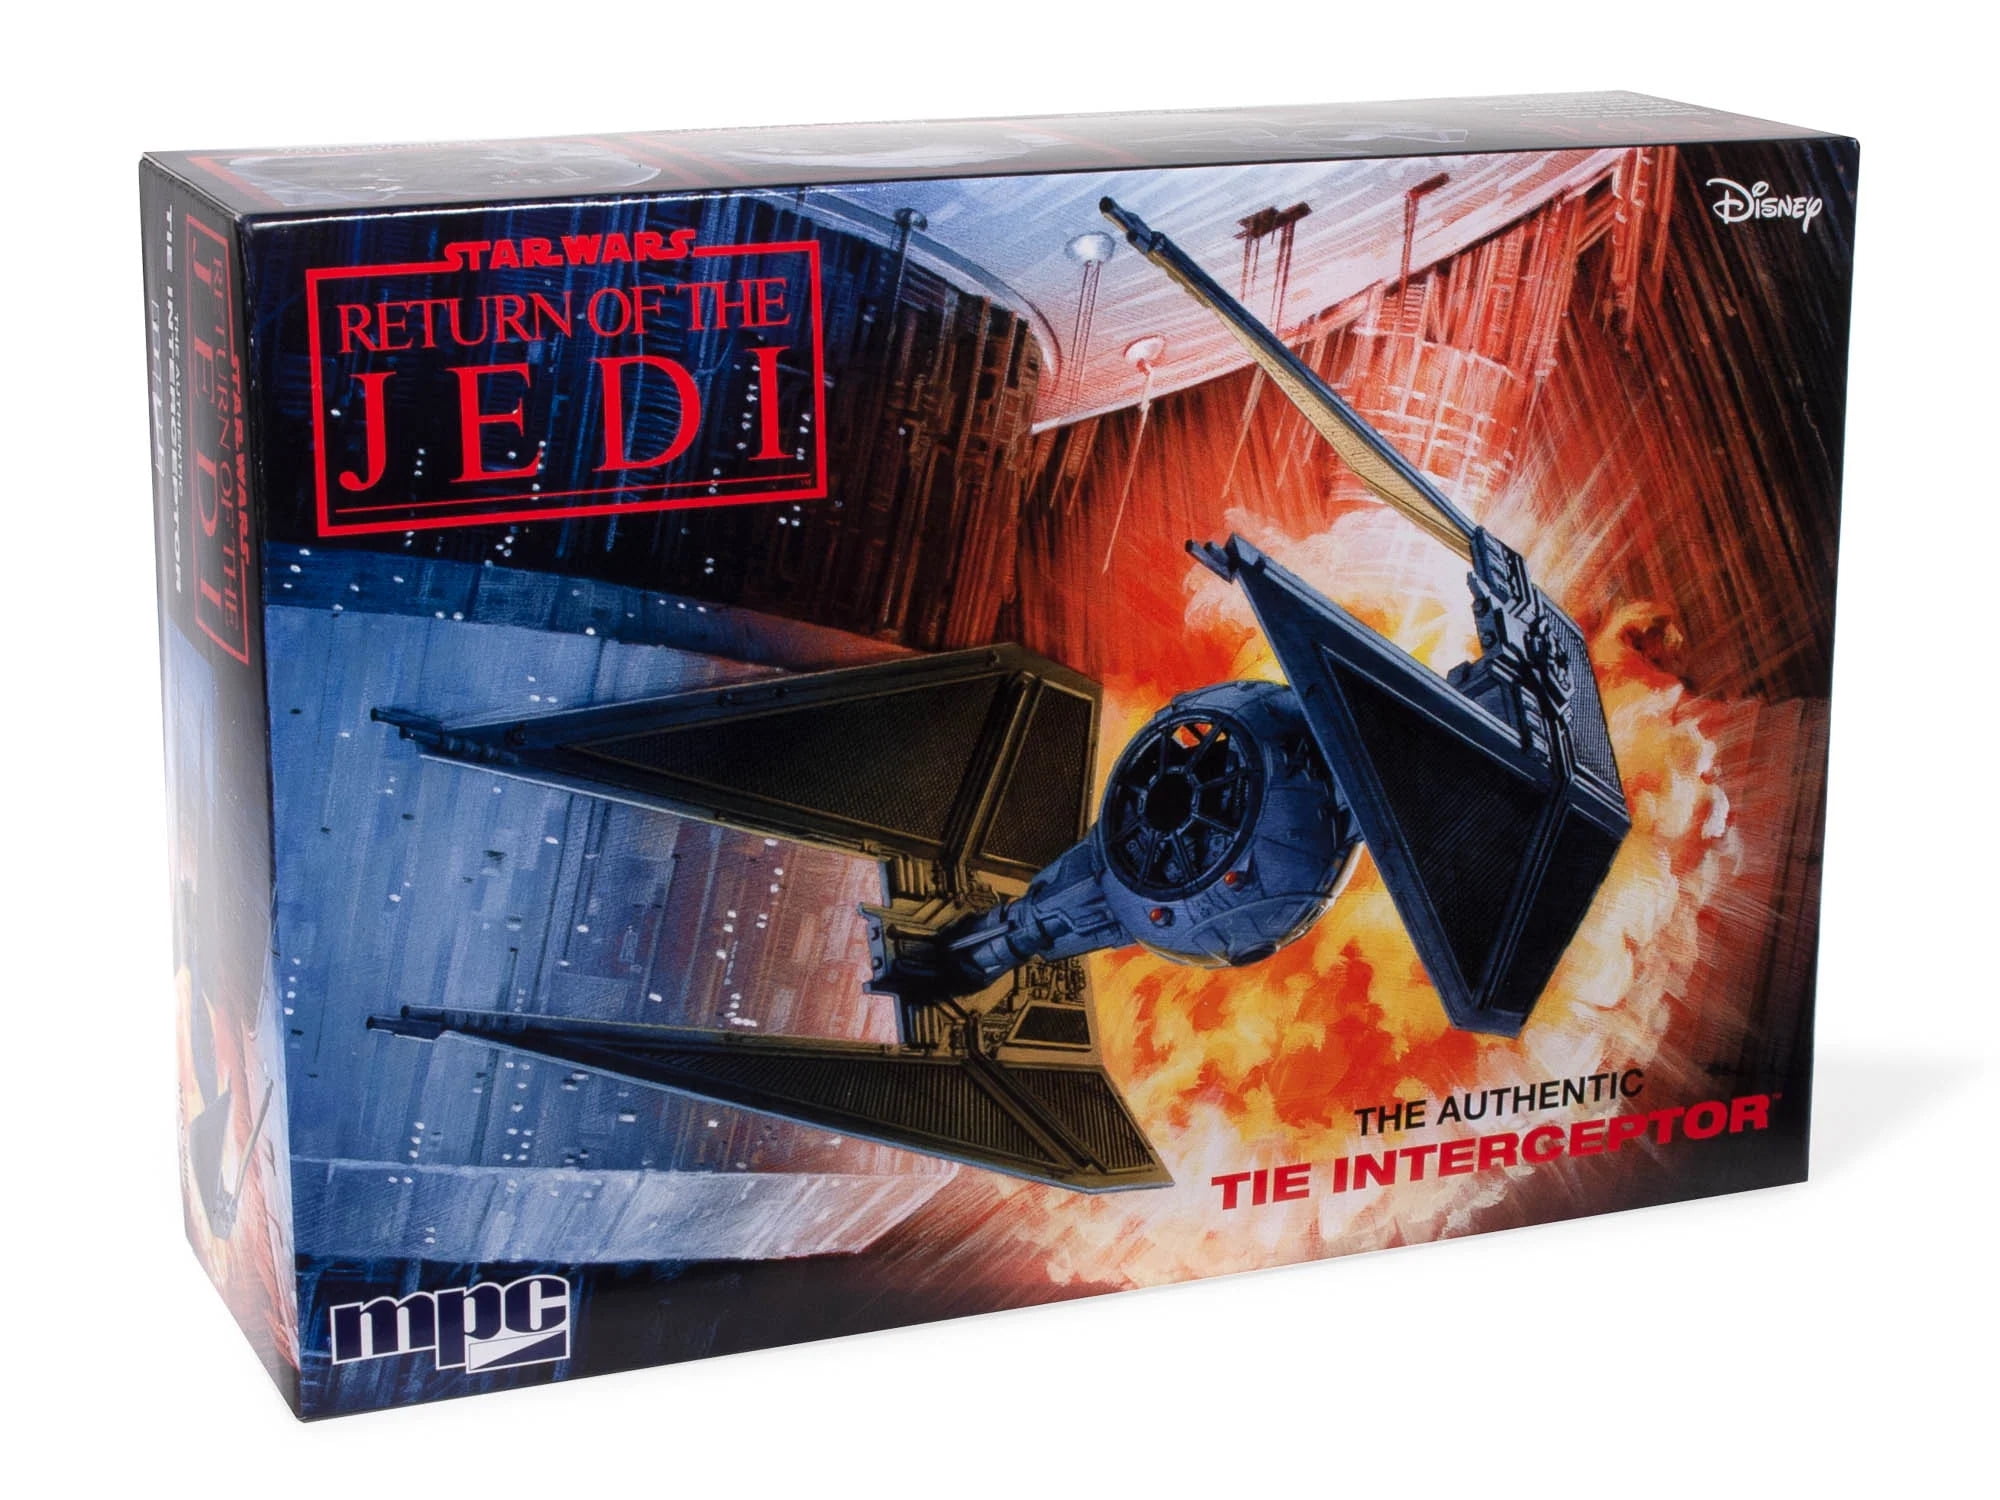 989 1 to 48 Scale Tie Interceptor Spacecraft Star Wars Return of the Jedi 1983 Movie Skill 2 Model Kit -  Mpc, MPC989